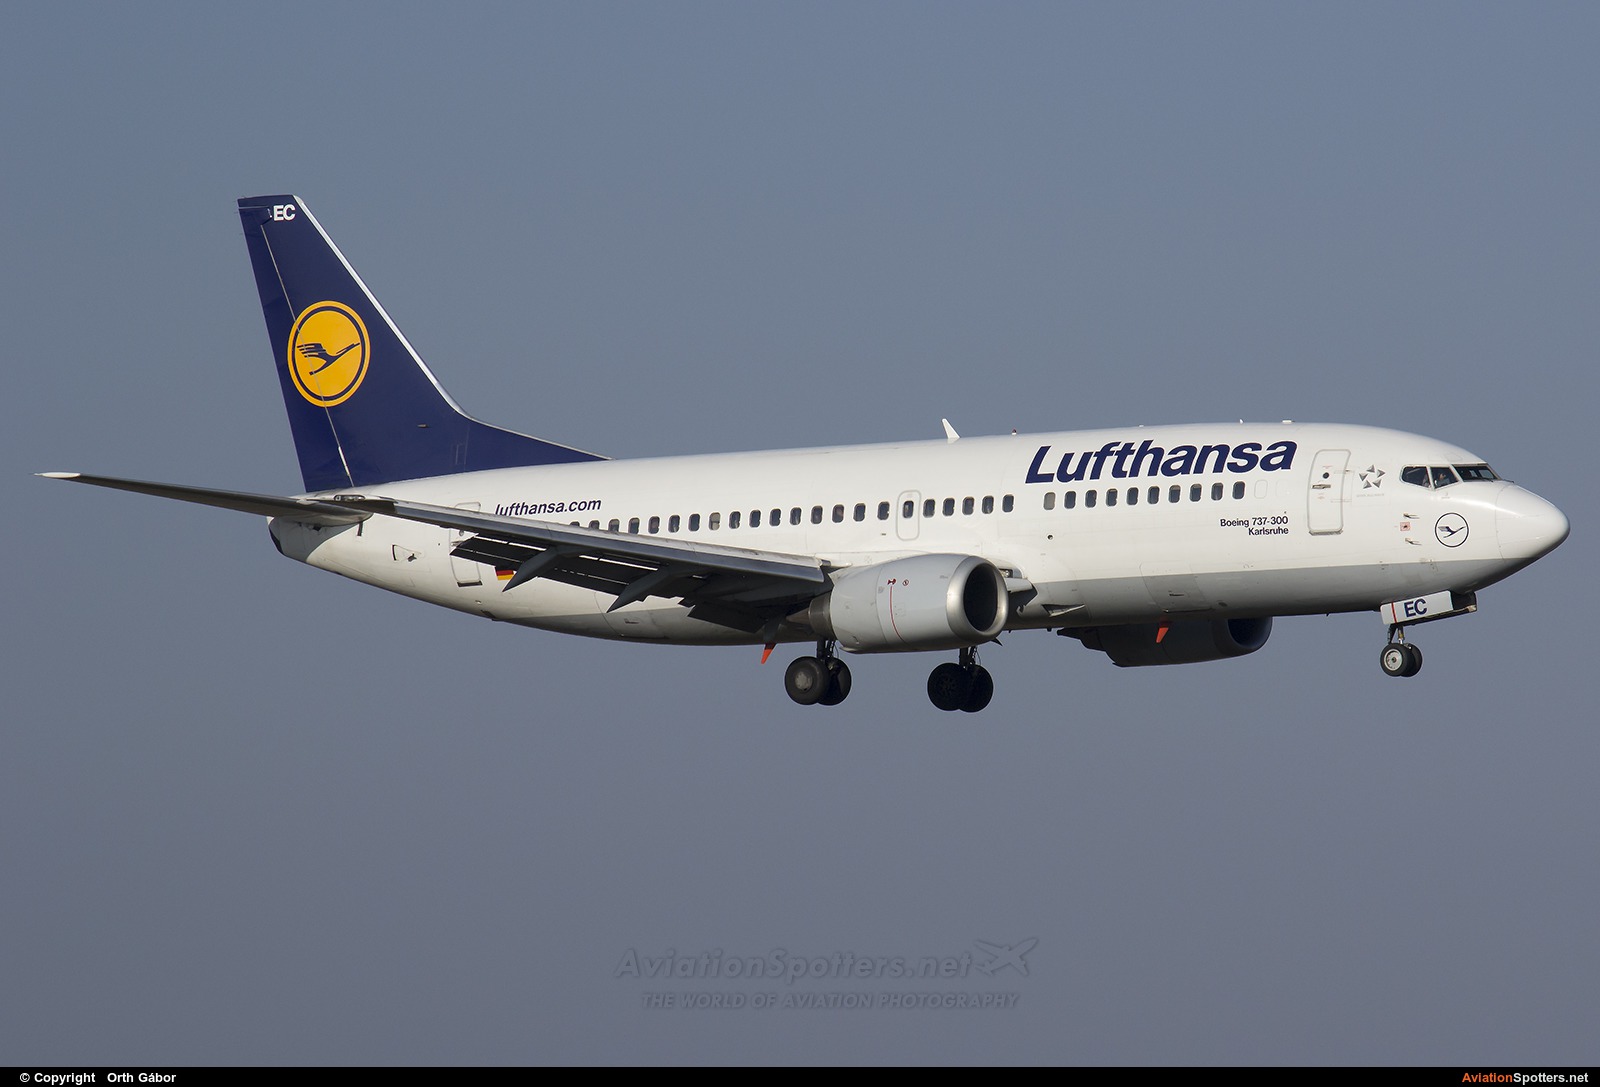 Lufthansa  -  737-300  (D-ABEC) By Orth Gábor (Roodkop)